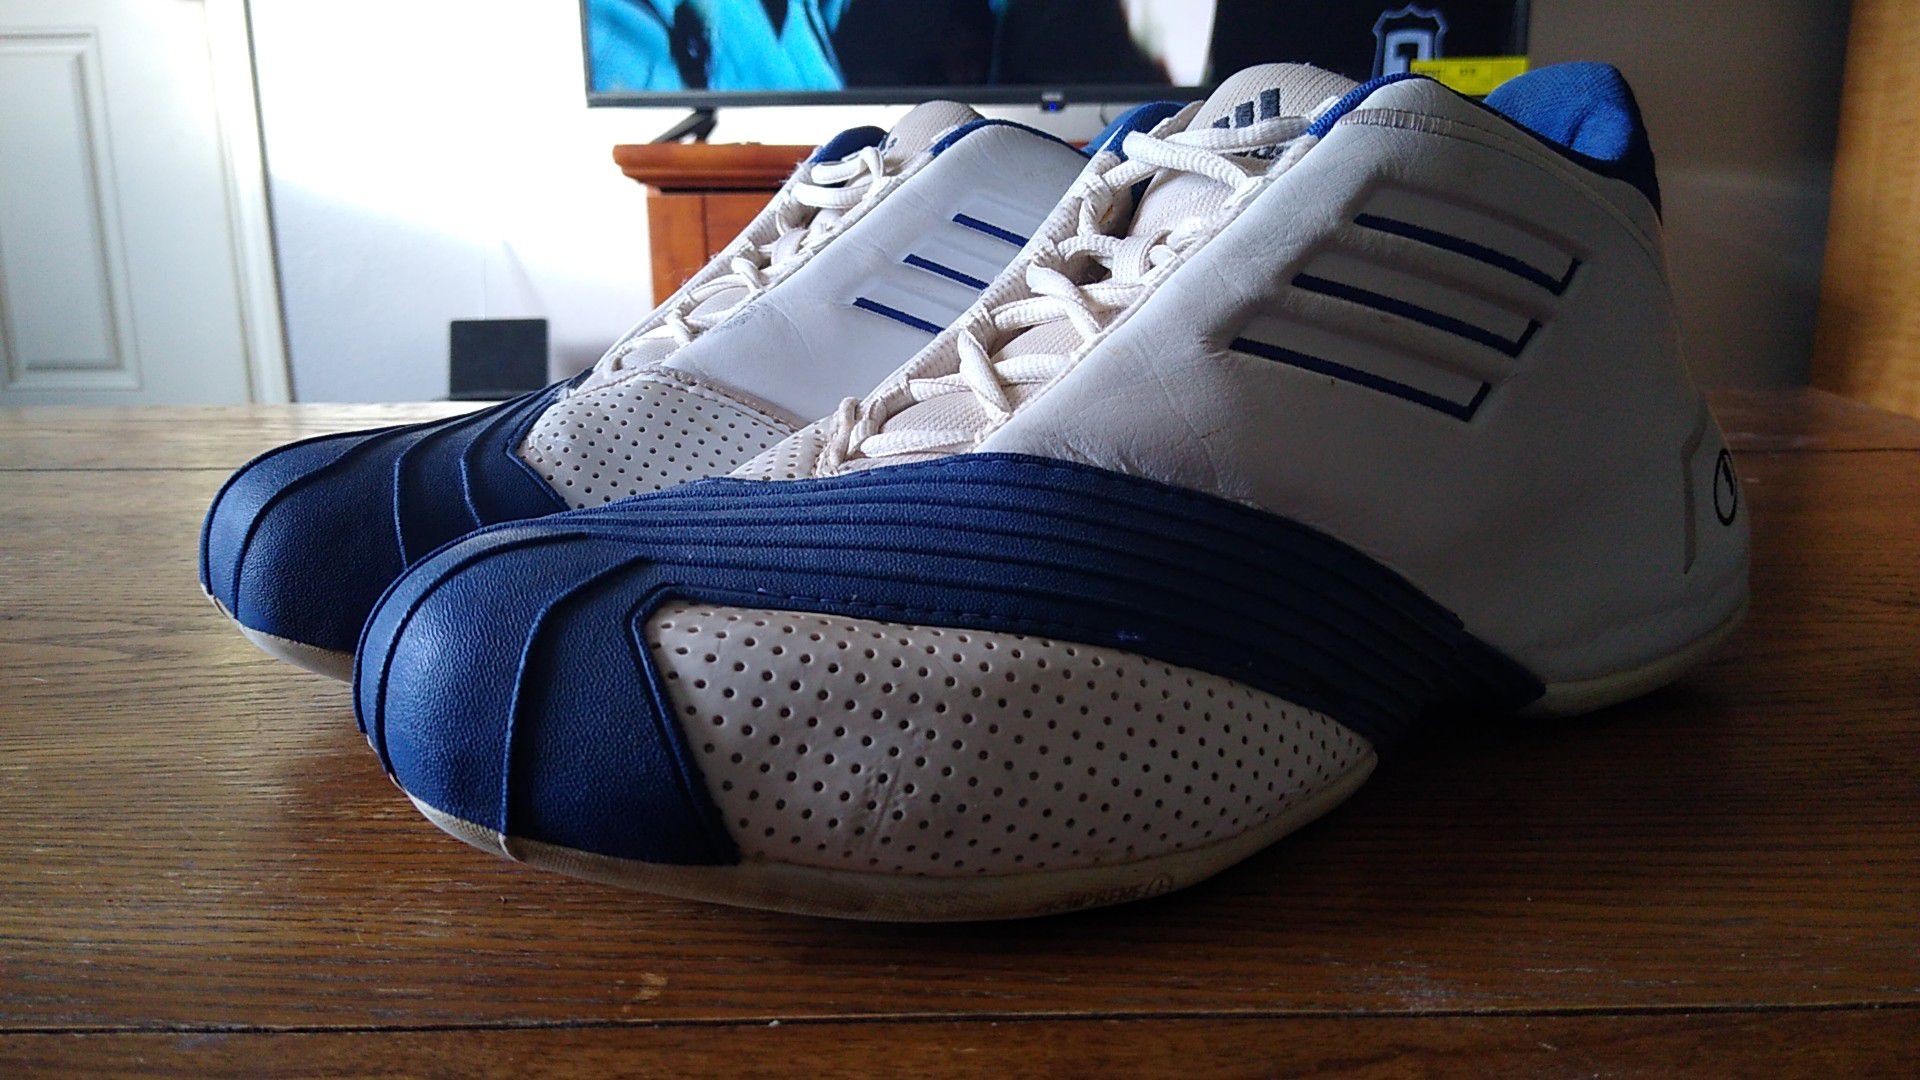 Recepción Permeabilidad oferta Adidas 2001 T-MAC Blue/White Basketball Shoes Size 11 for Sale in San  Antonio, TX - OfferUp